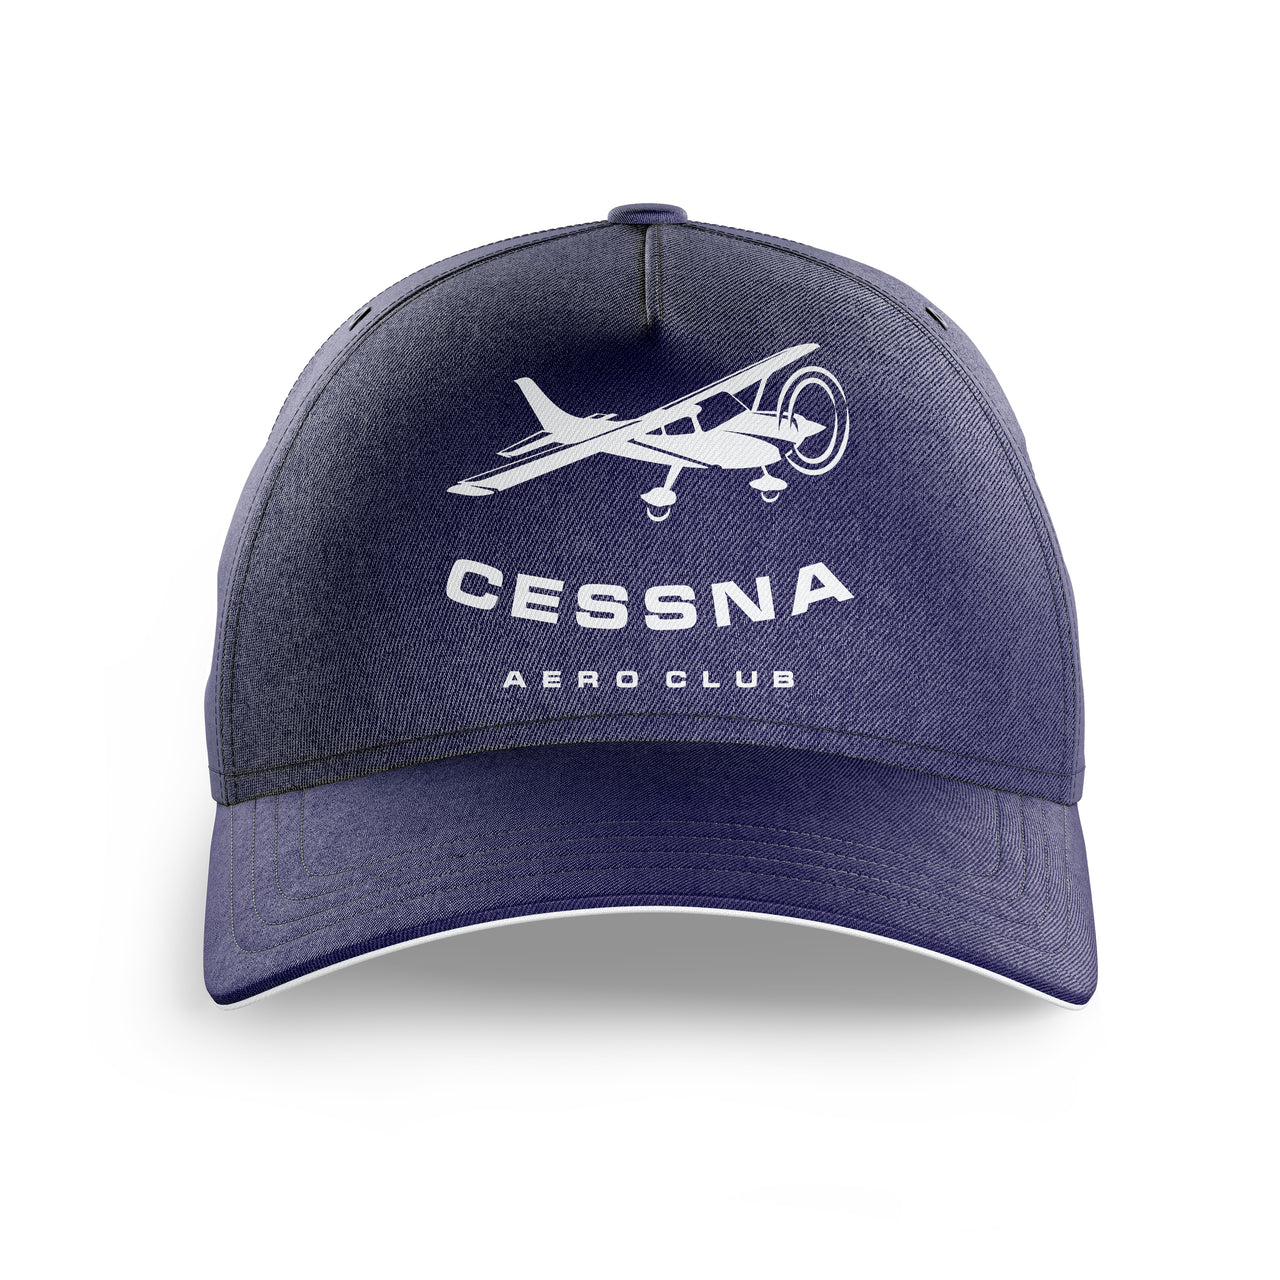 Cessna Aeroclub Printed Hats